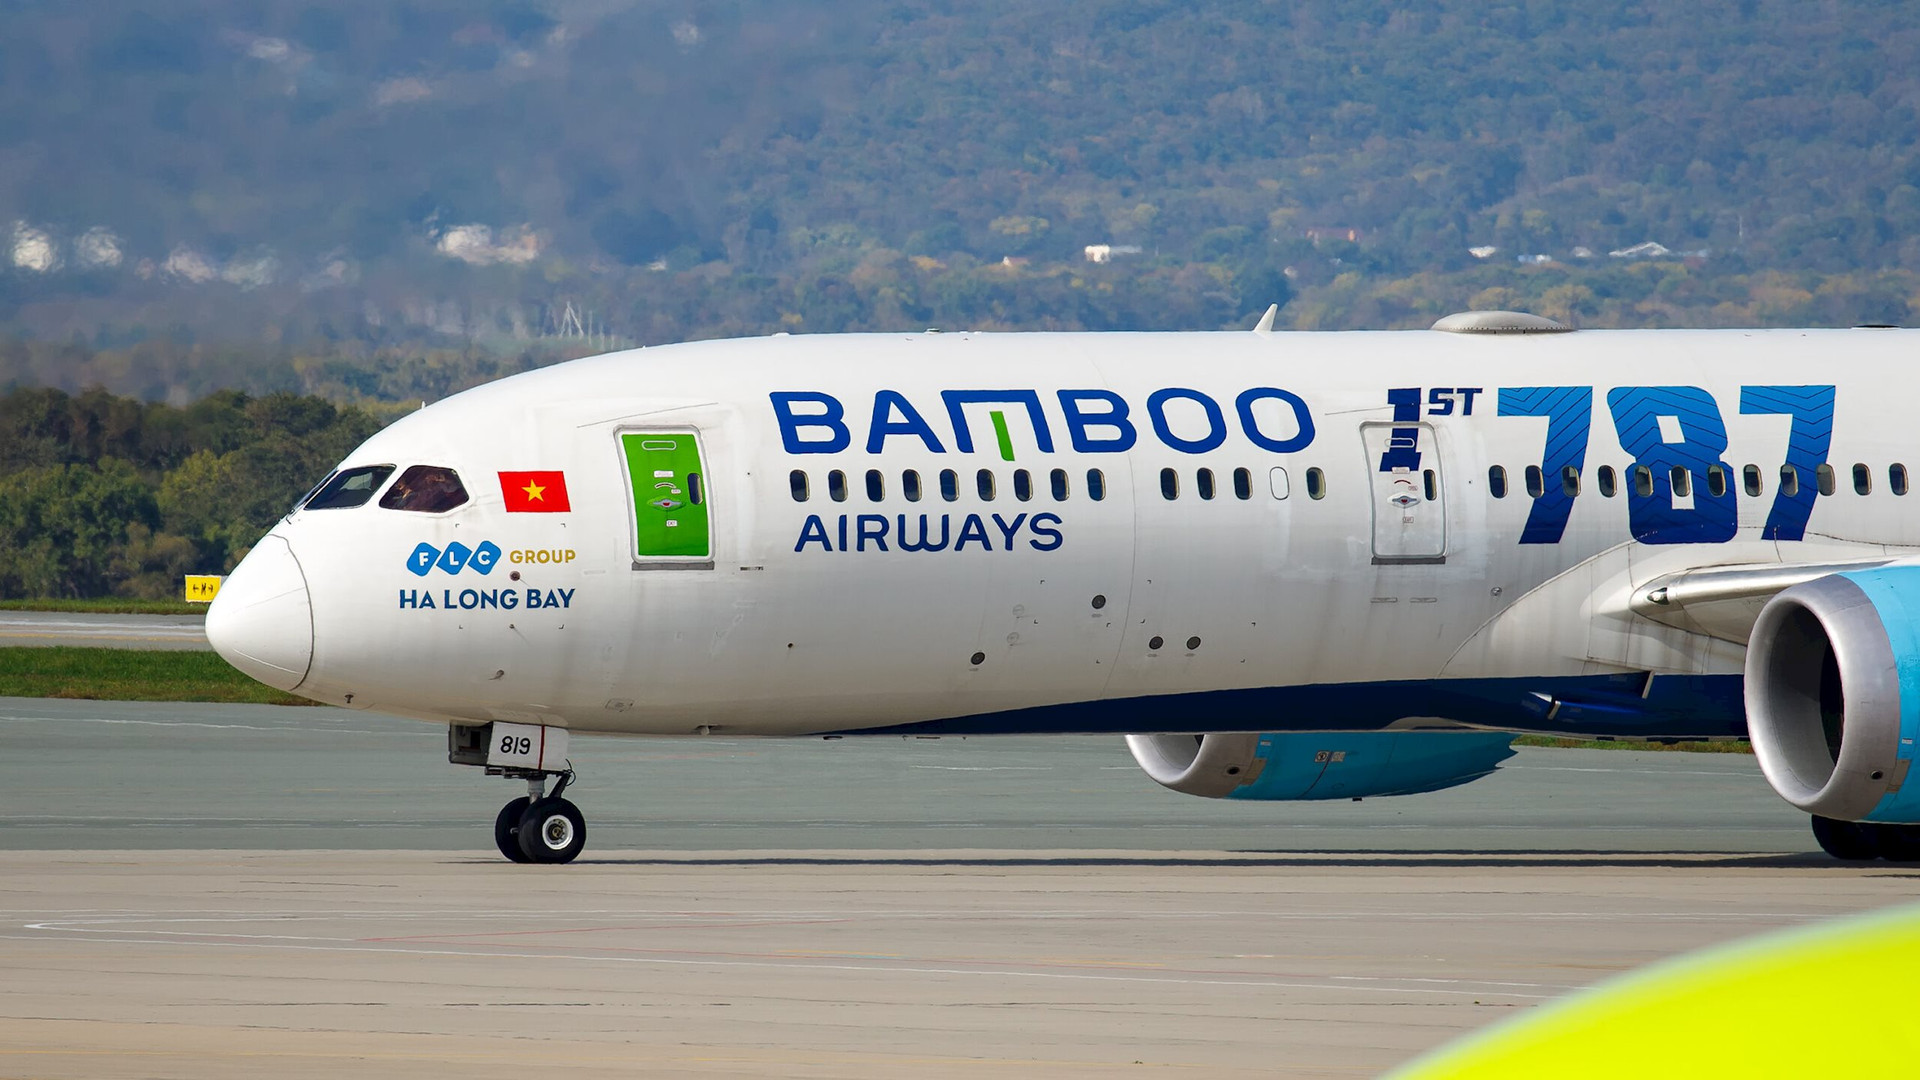 003-bamboo-airways-boeing-787-9-dreamliner-vn-a819-at-vladivostok-international-airport-scaled.jpg